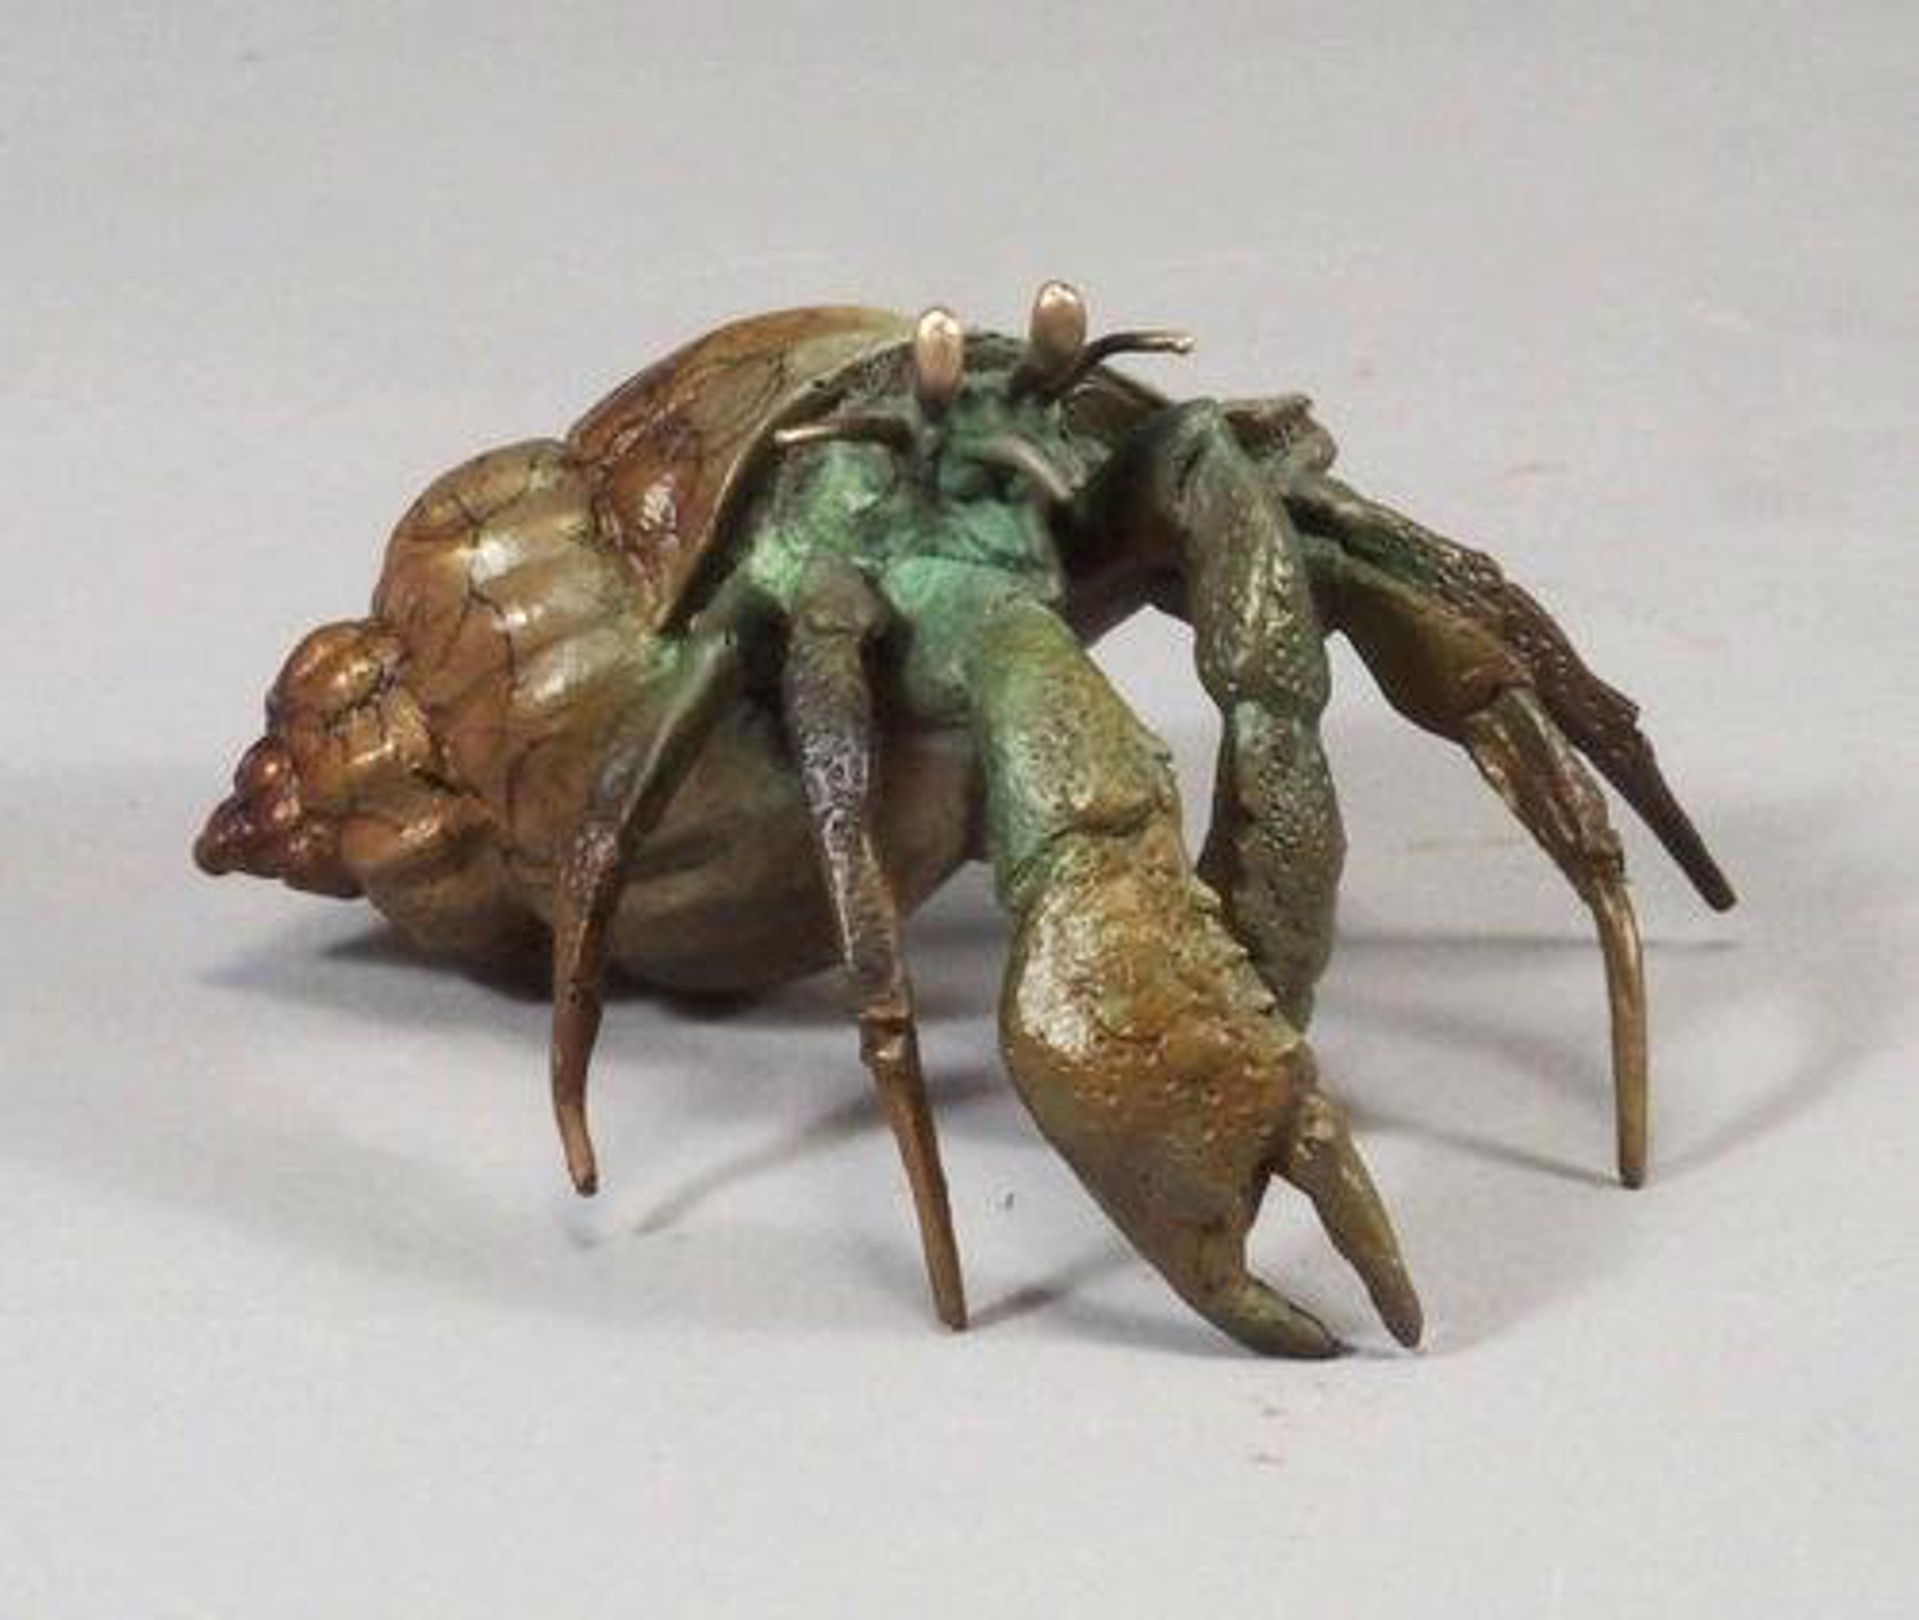 Hermit Crab by Dan Chen